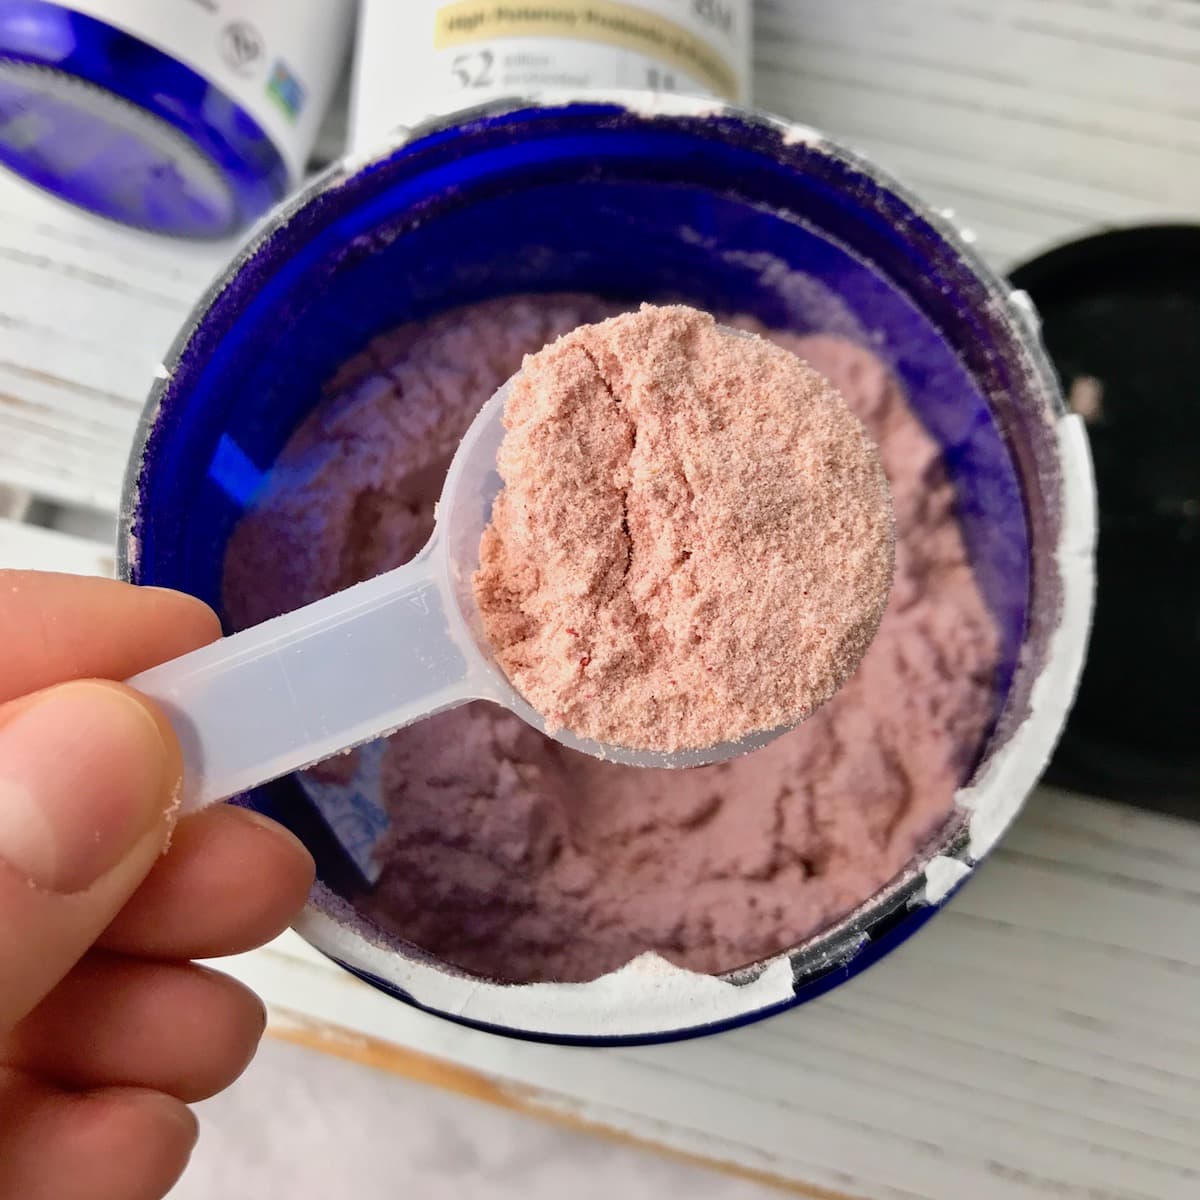 A scoop of pink vegan probiotic powder.